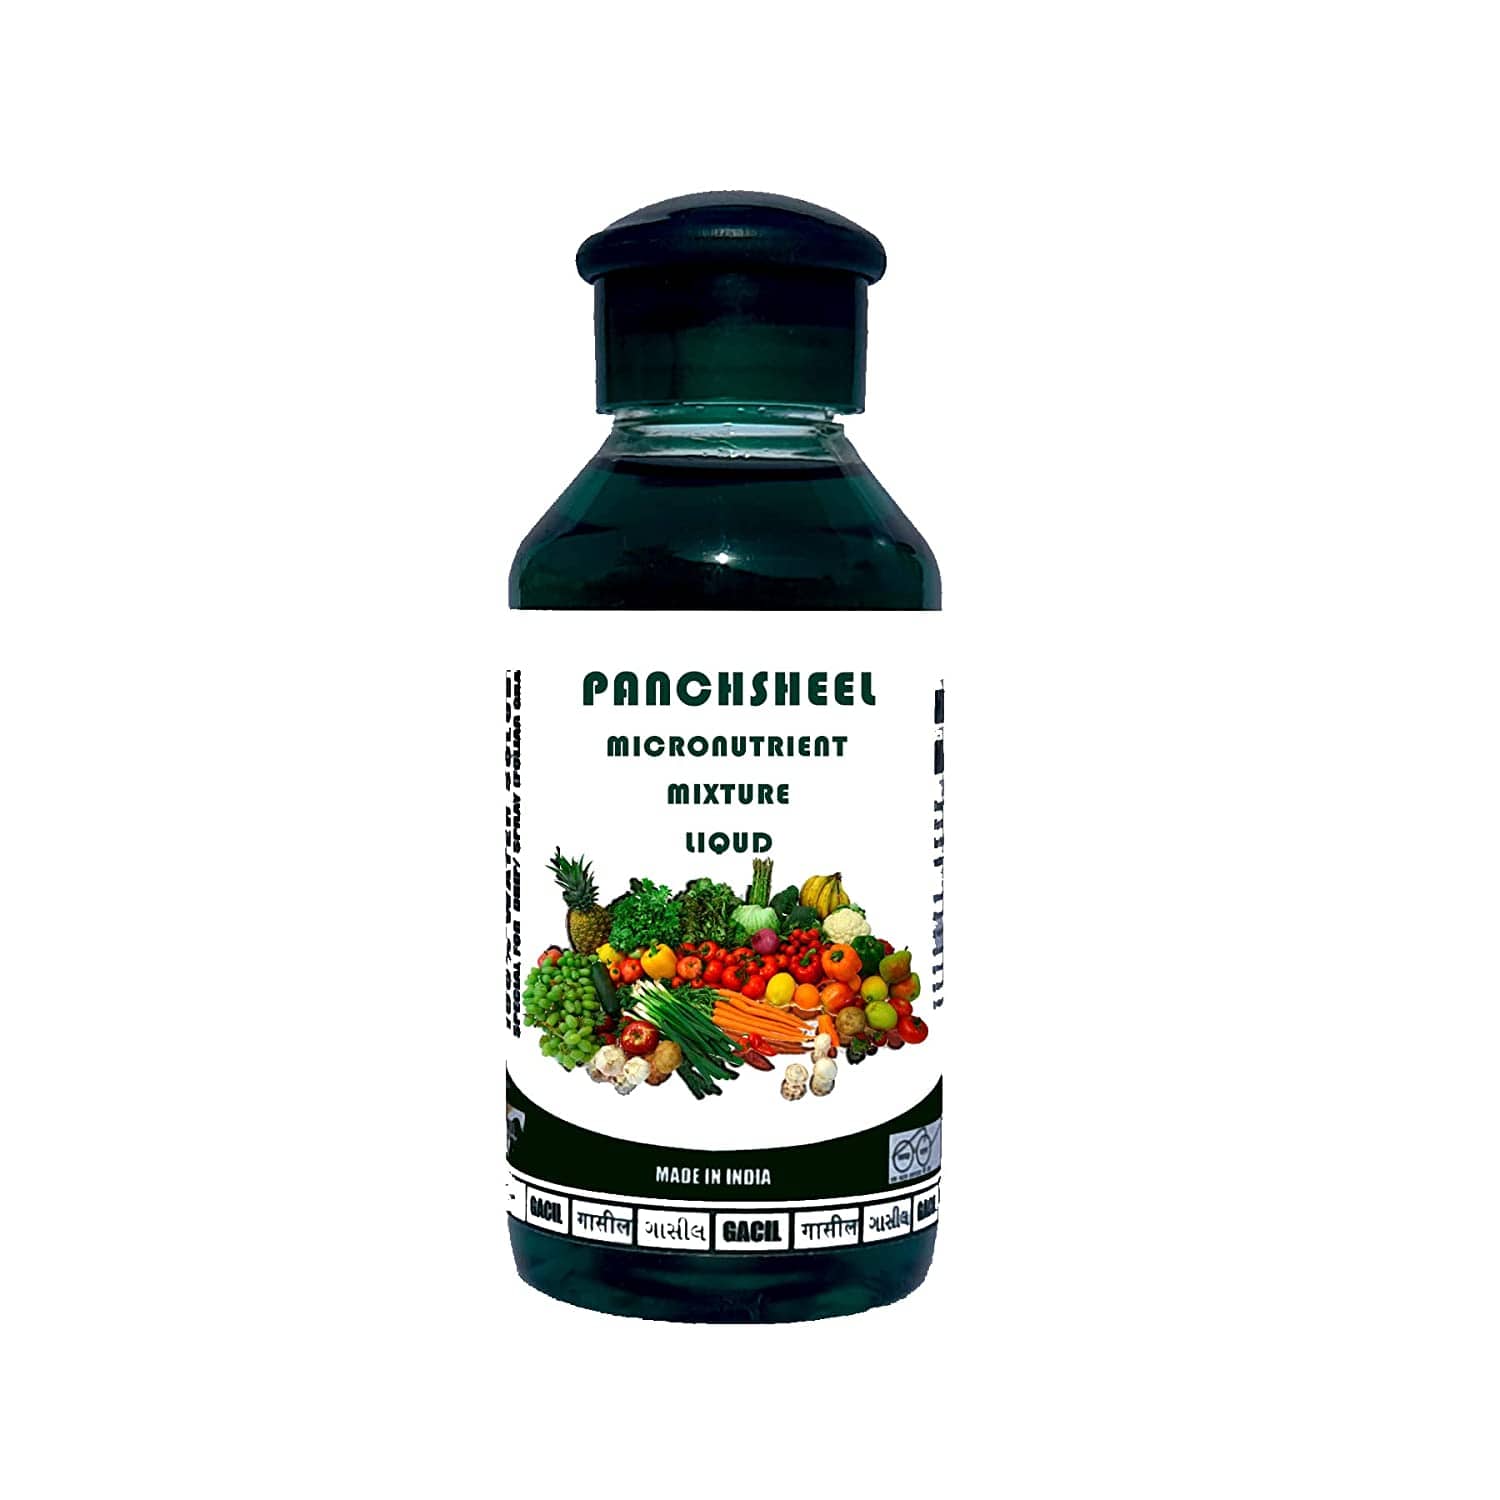 Panchsheel Micronutrients Fertilizer for Soil Improvement (Liquid Mixture)